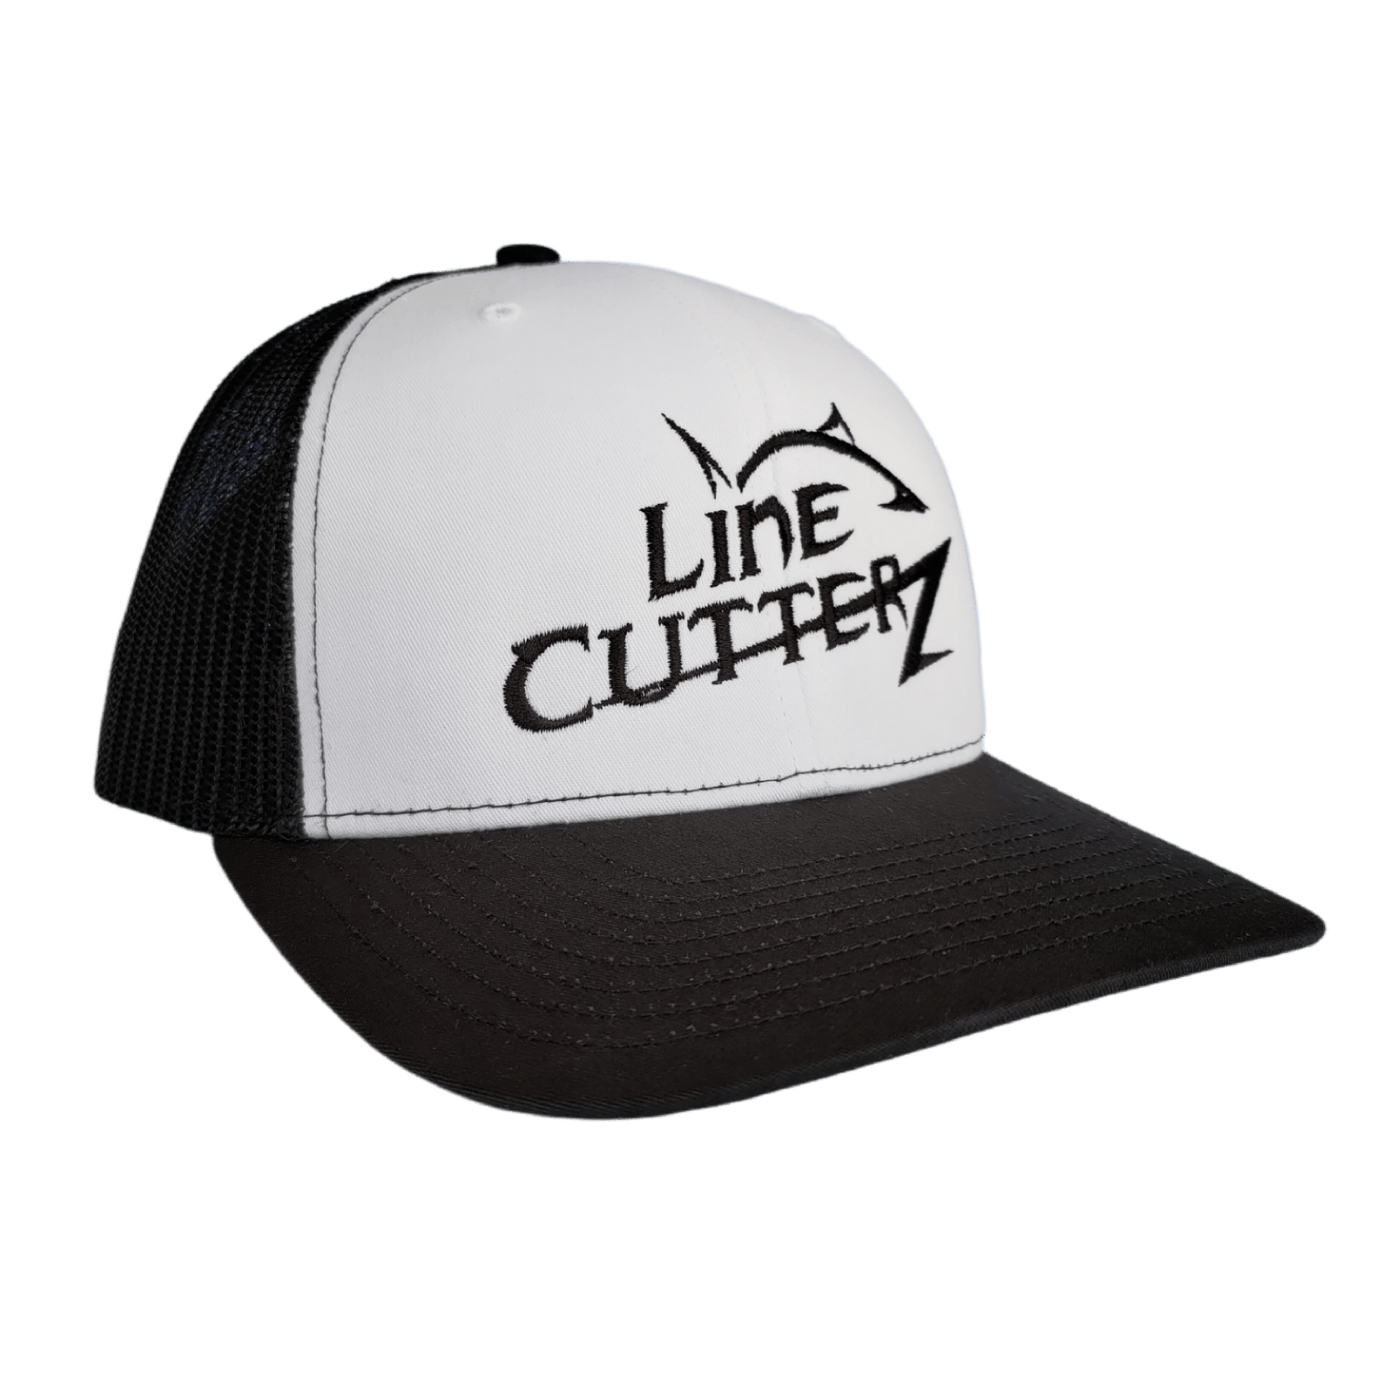 Line Cutterz Meshback Trucker Snapback Hats Line Cutterz White/Black 